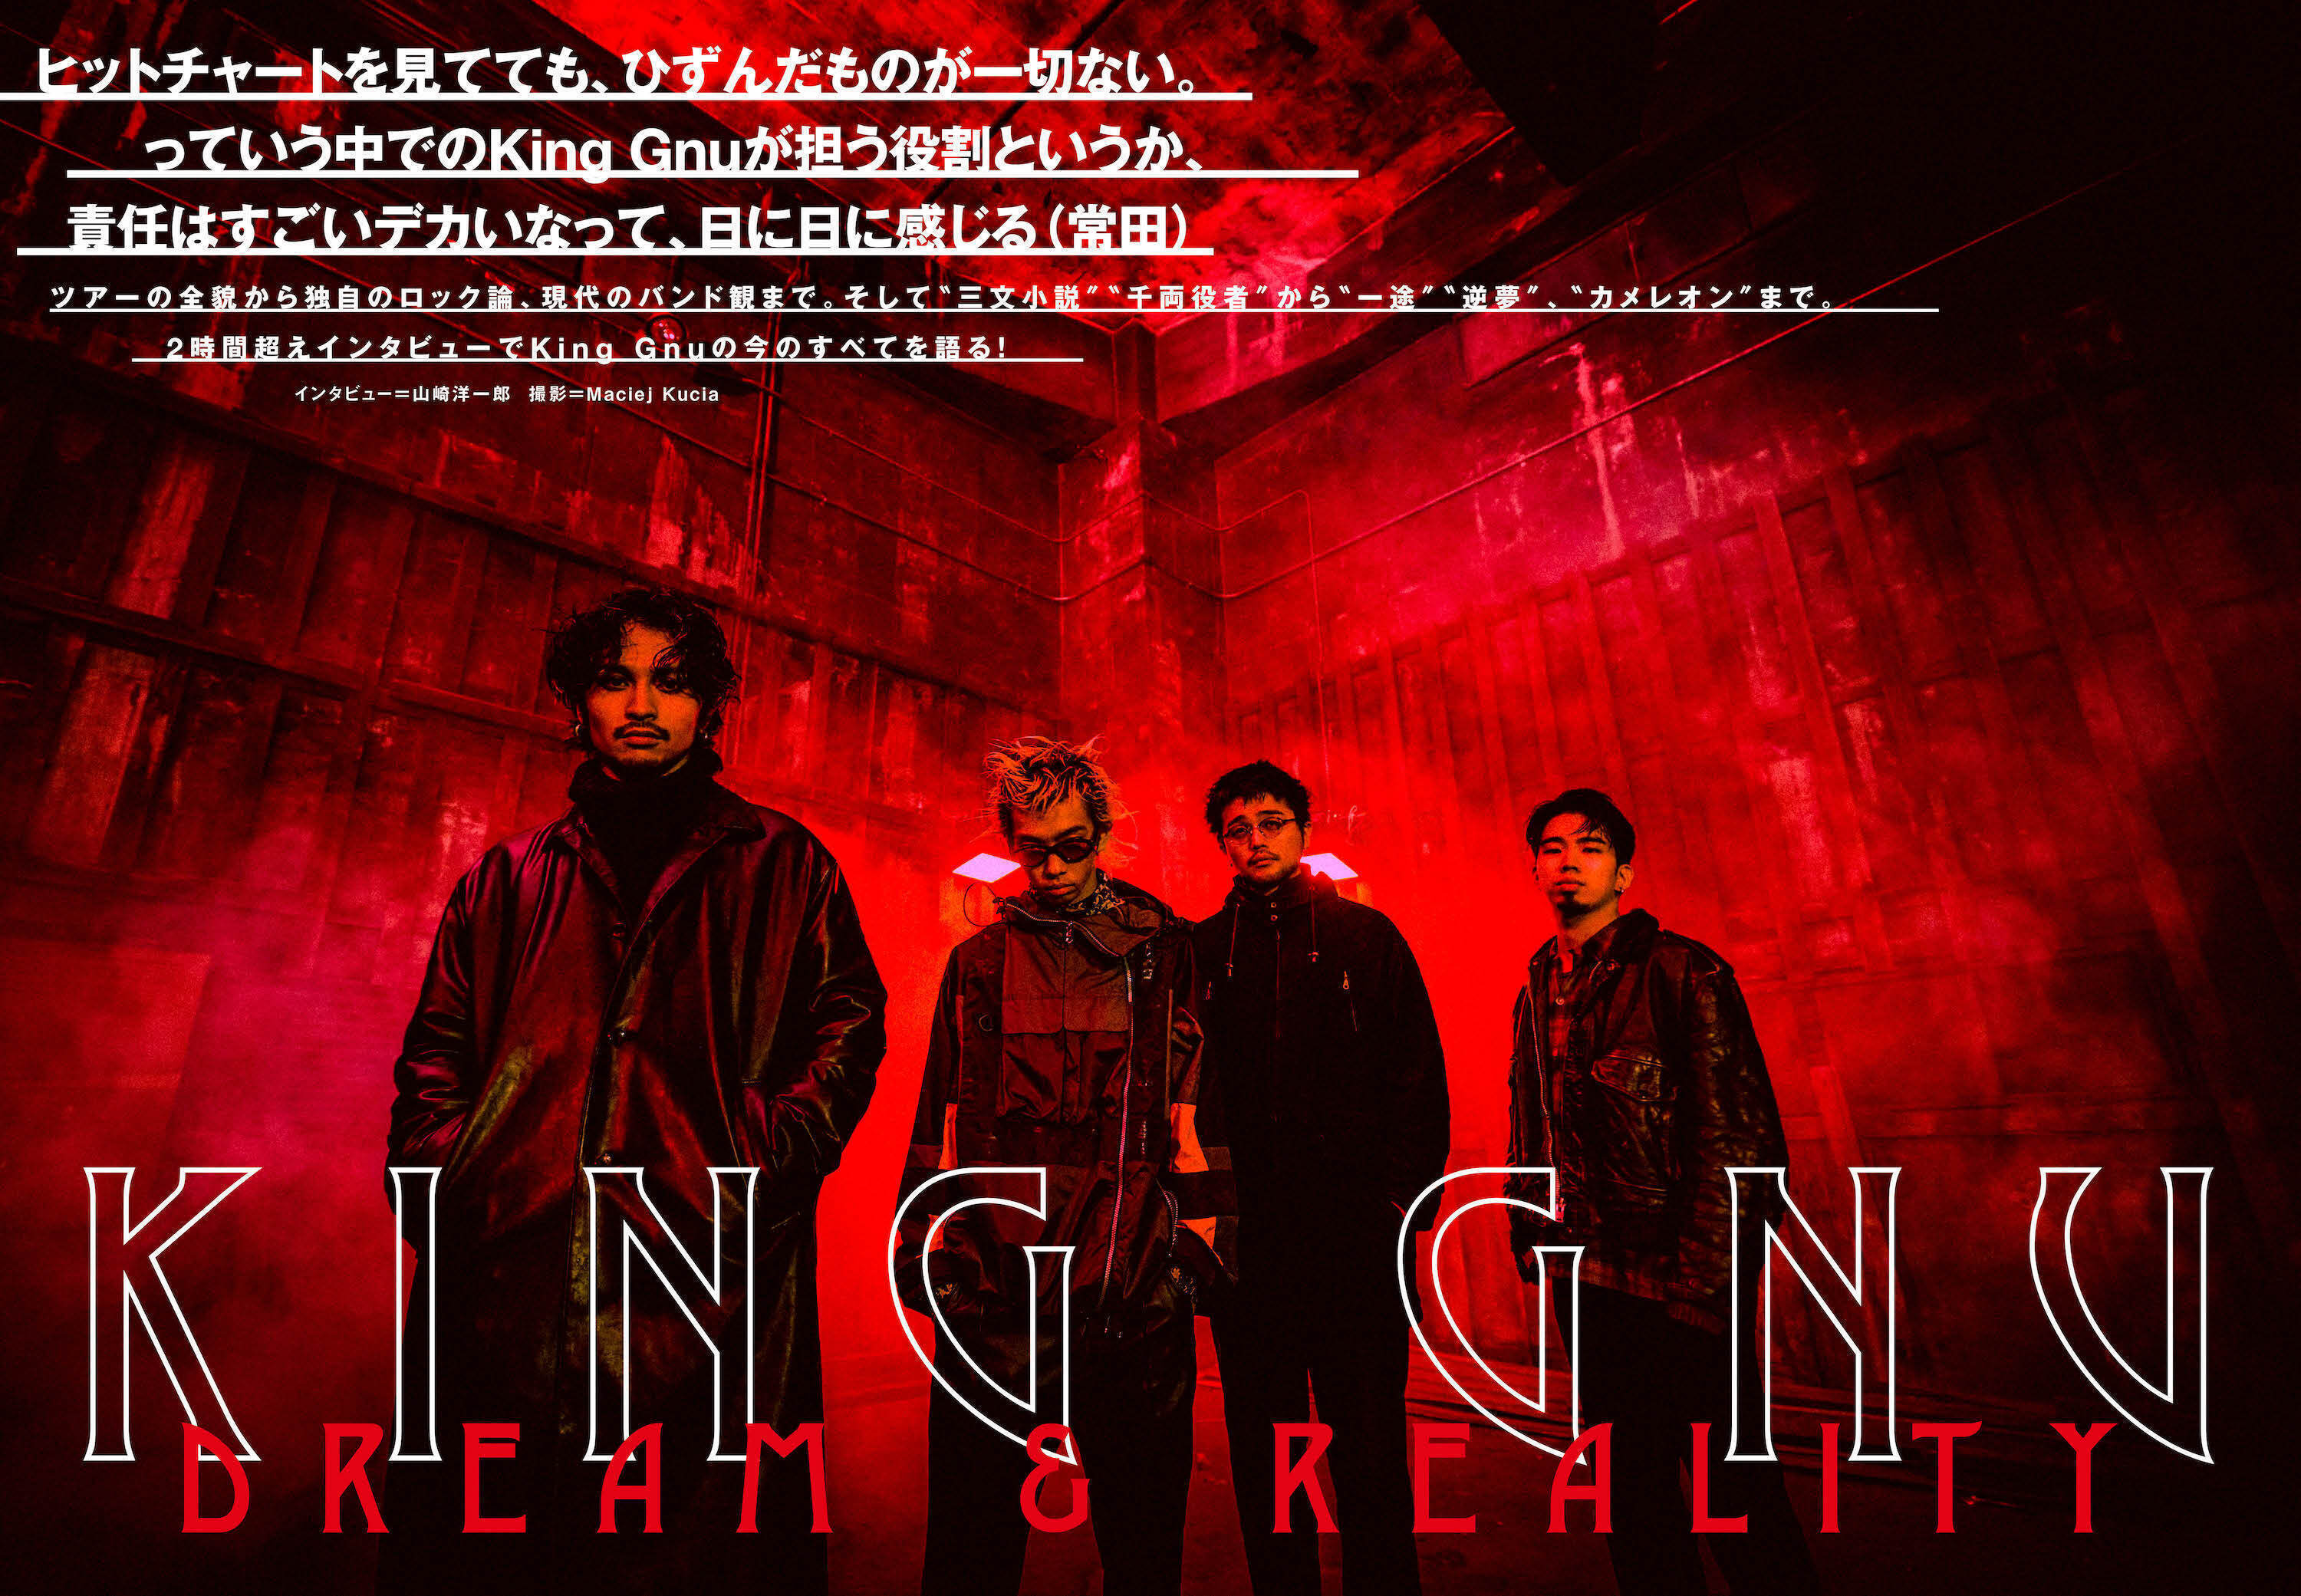 【JAPAN最新号】King Gnu、ツアーの全貌から独自のロック論、現代のバンド観、そして“三文小説”“千両役者”から“一途”“逆夢”、“カメレオン”まで。2時間超えインタビューで今のすべてを語る！